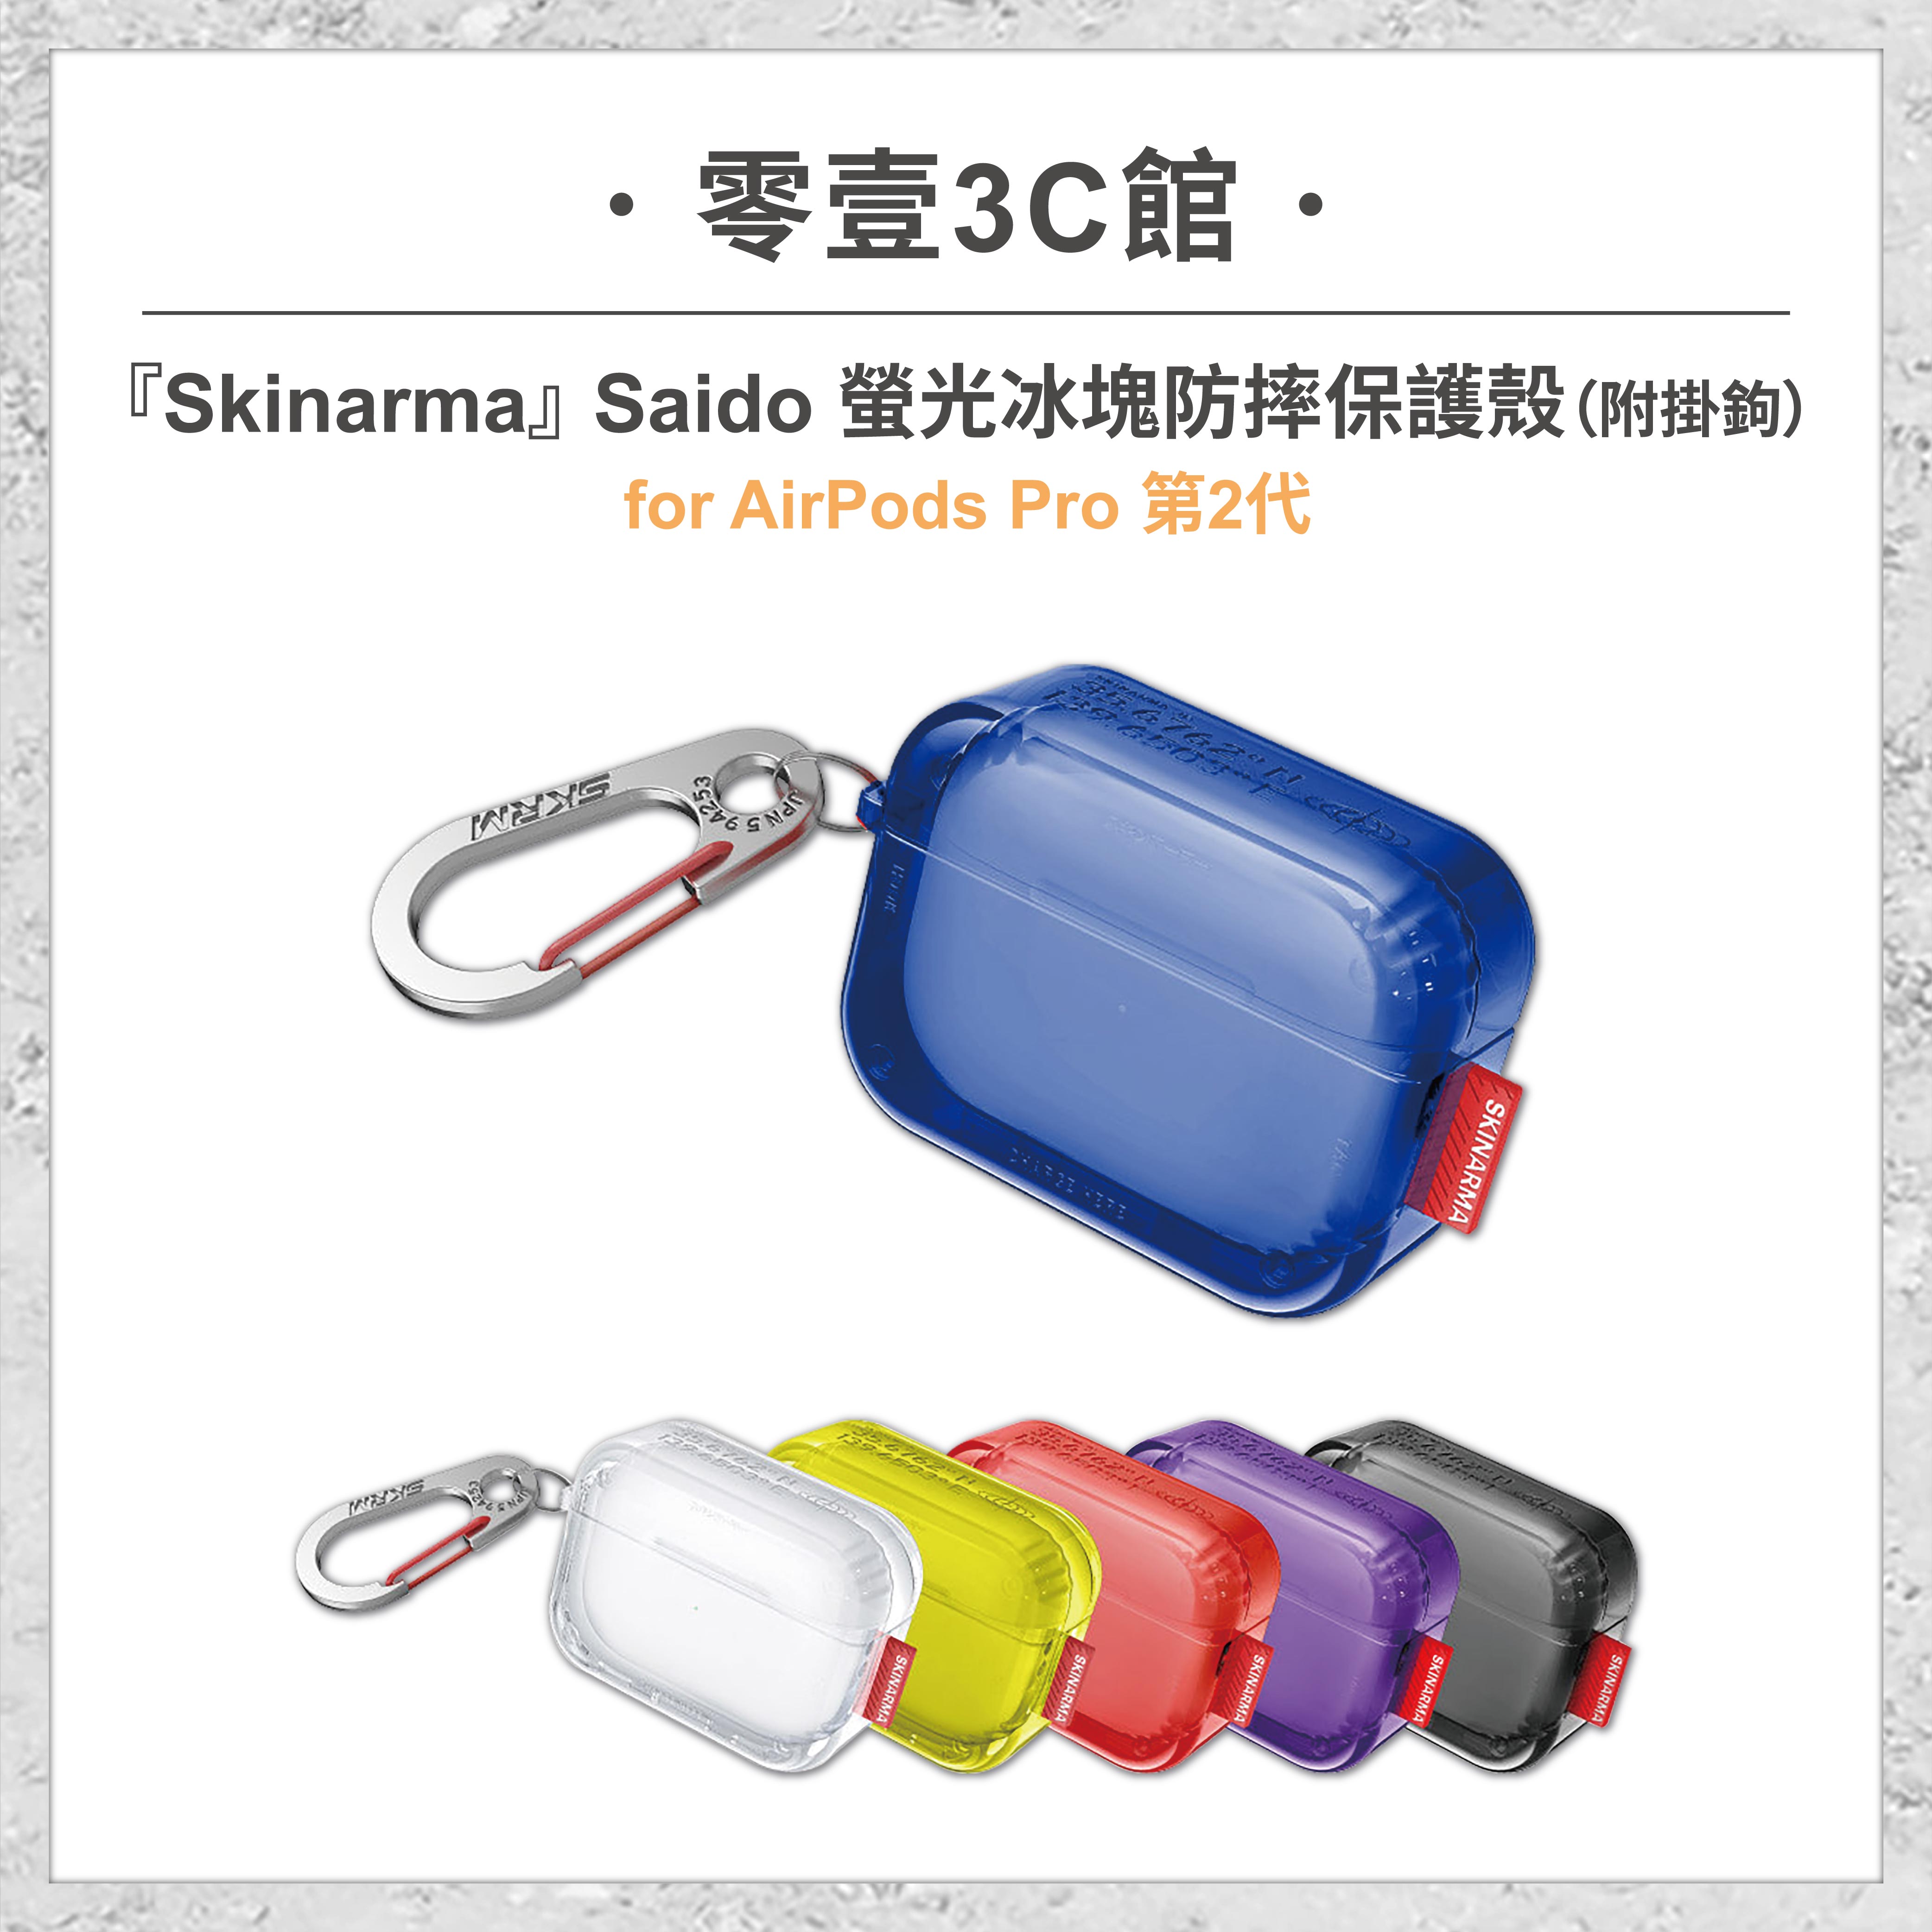 『Skinarma』Saido 螢光冰塊防摔保護殼(附掛鉤)AirPods Pro 第2代 耳機保護殼